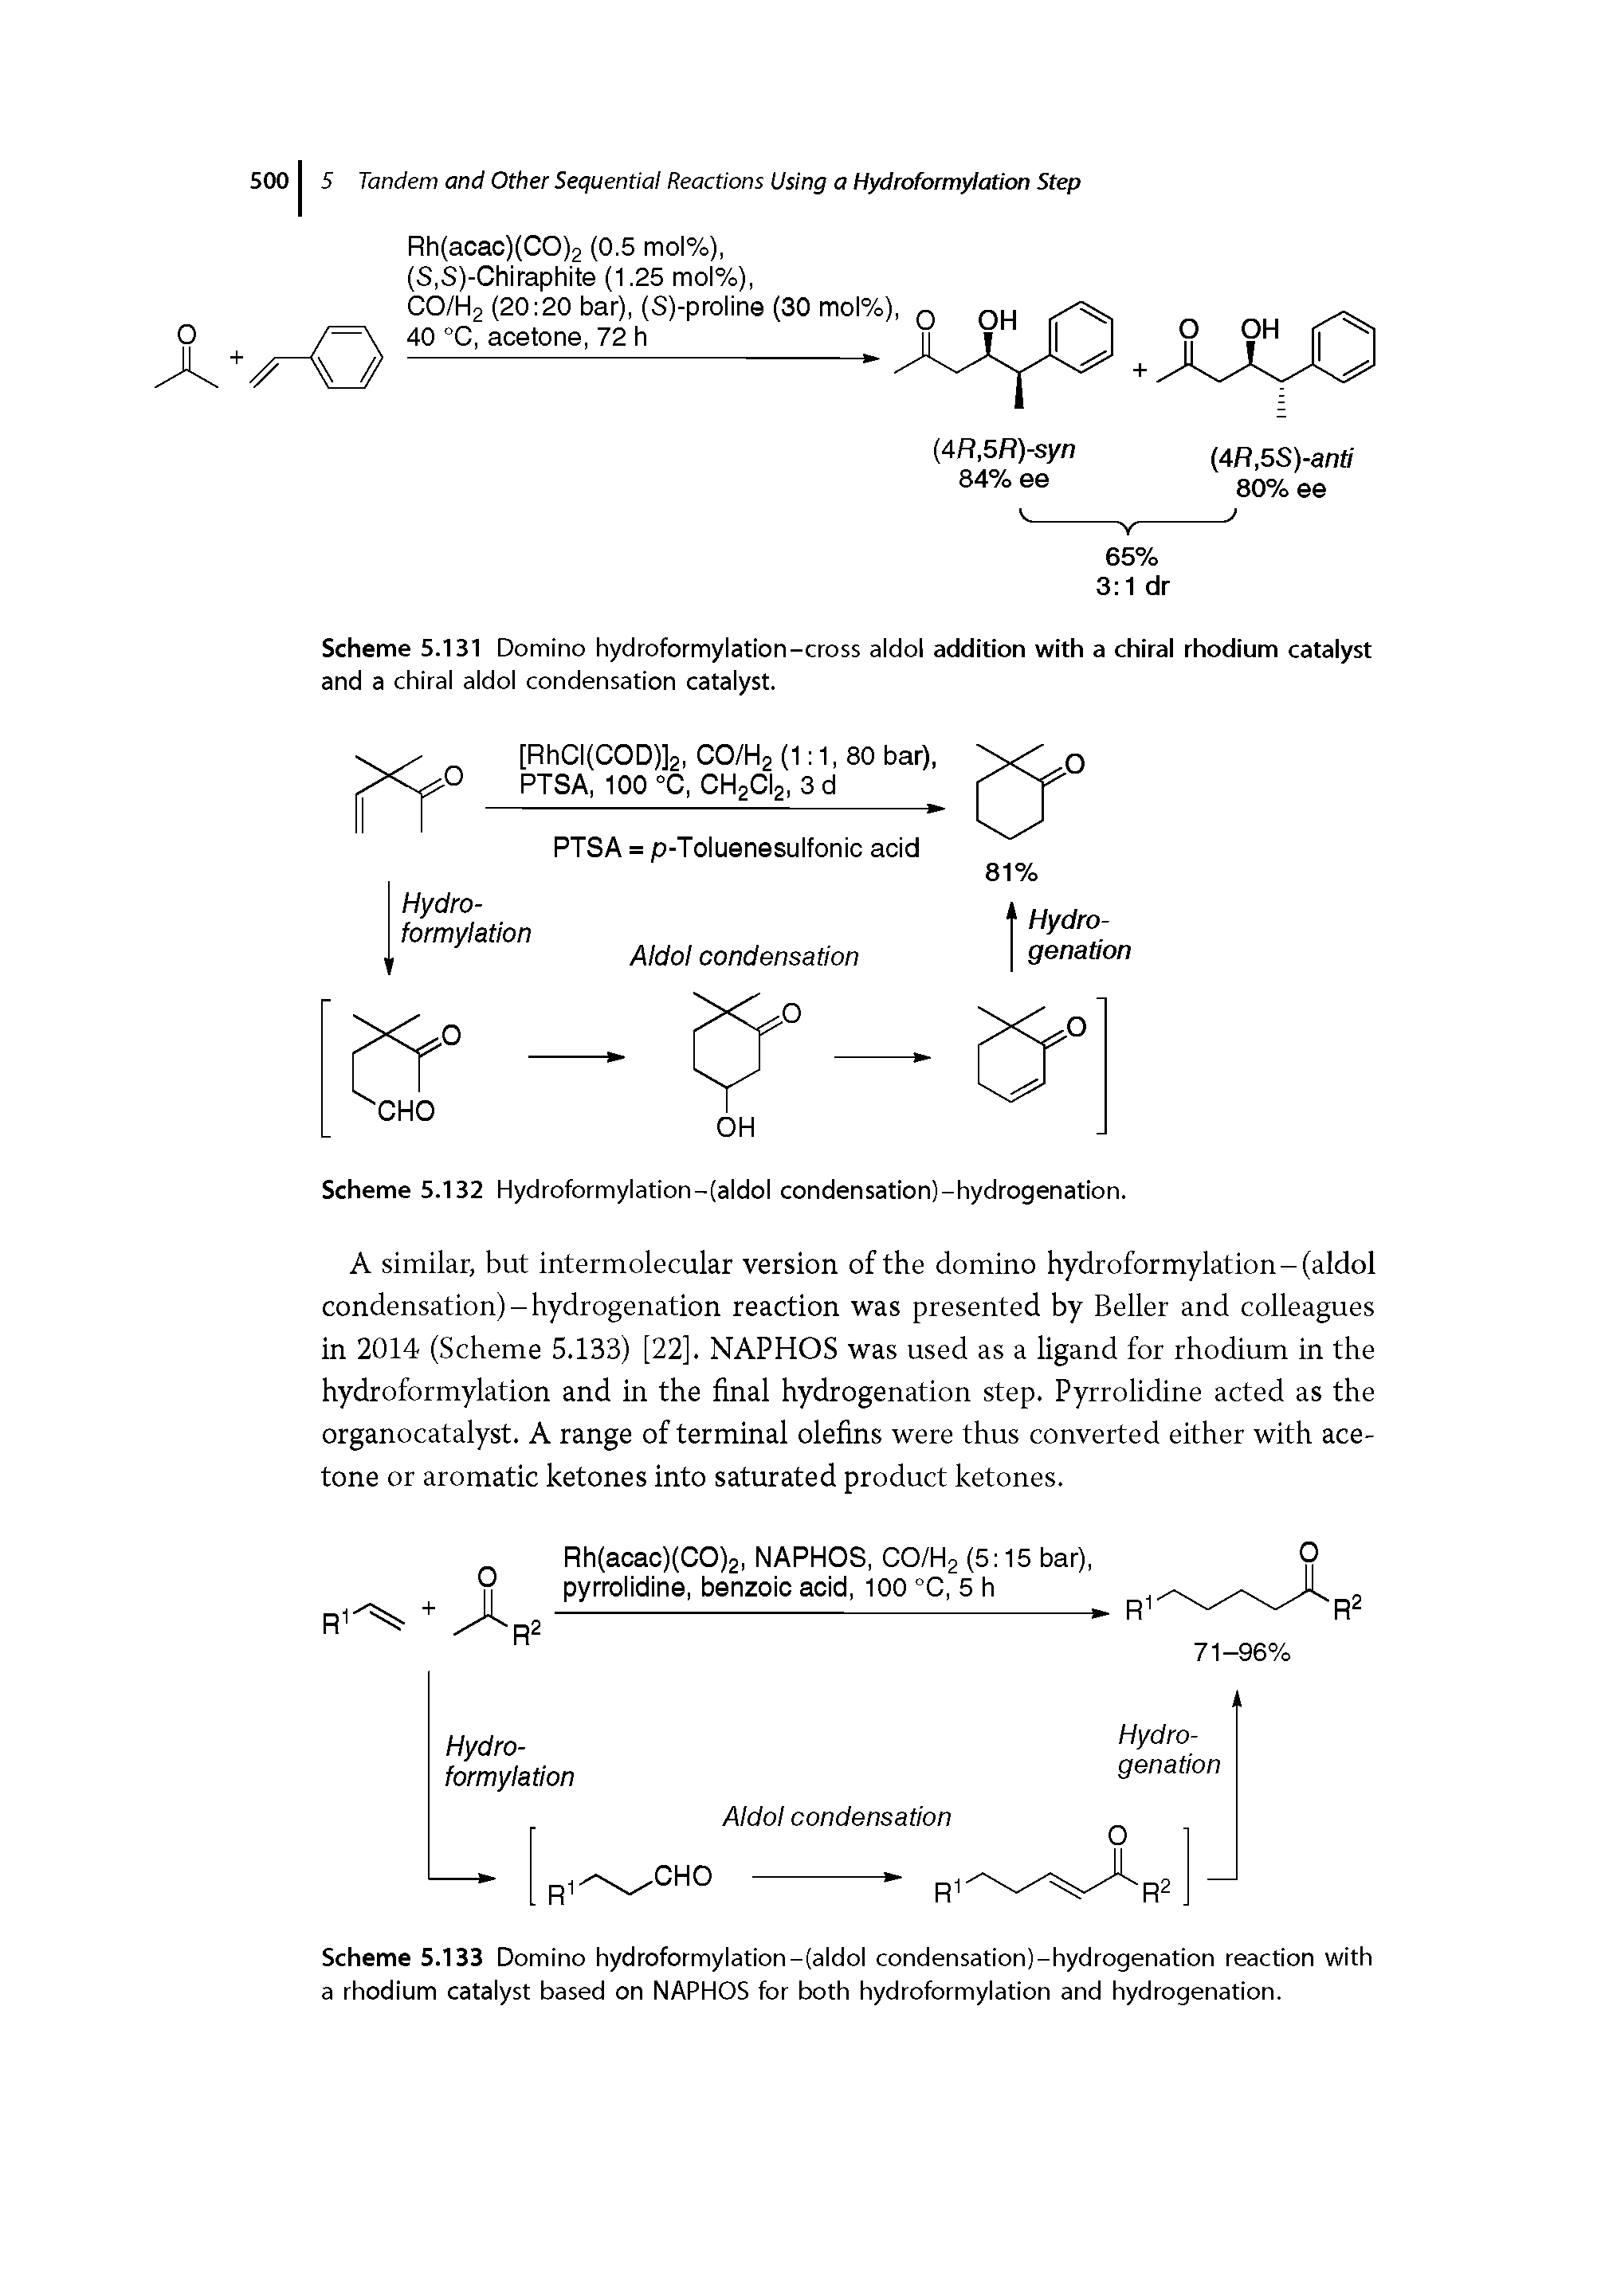 Scheme 5.131 Domino hydroformylation-cross aldol addition with a chiral rhodium catalyst and a chiral aldol condensation catalyst.